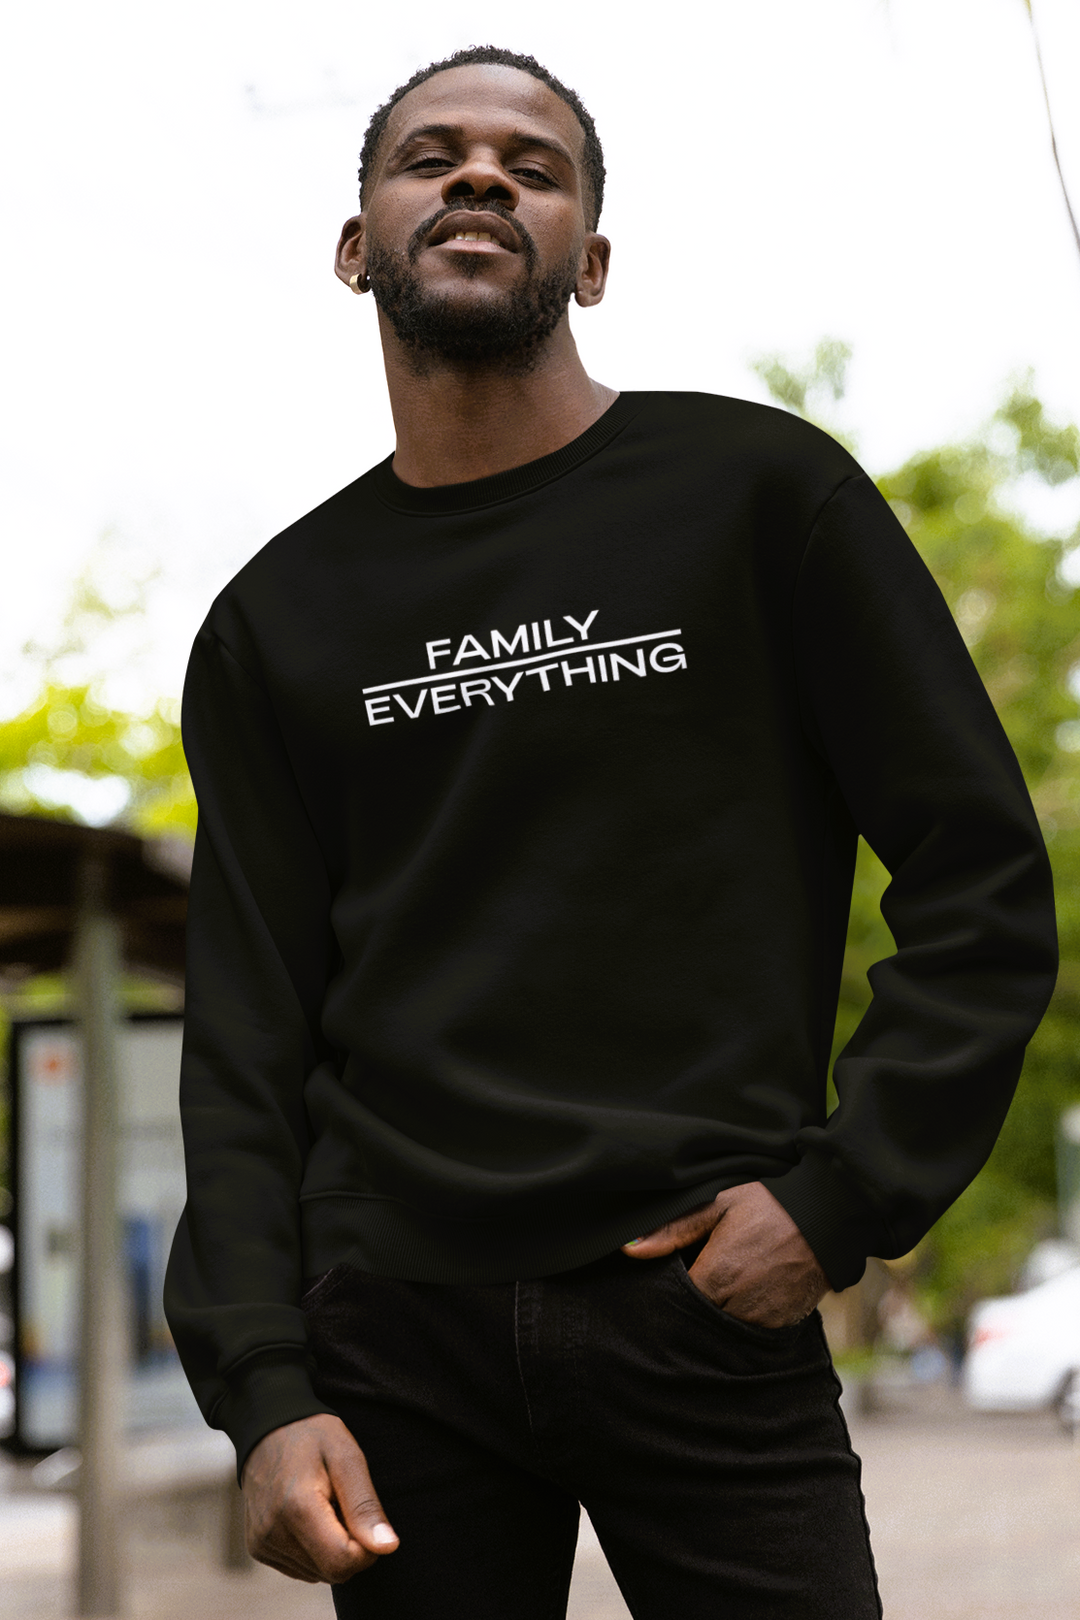 Family over everything - Classic unisex sweatshirt